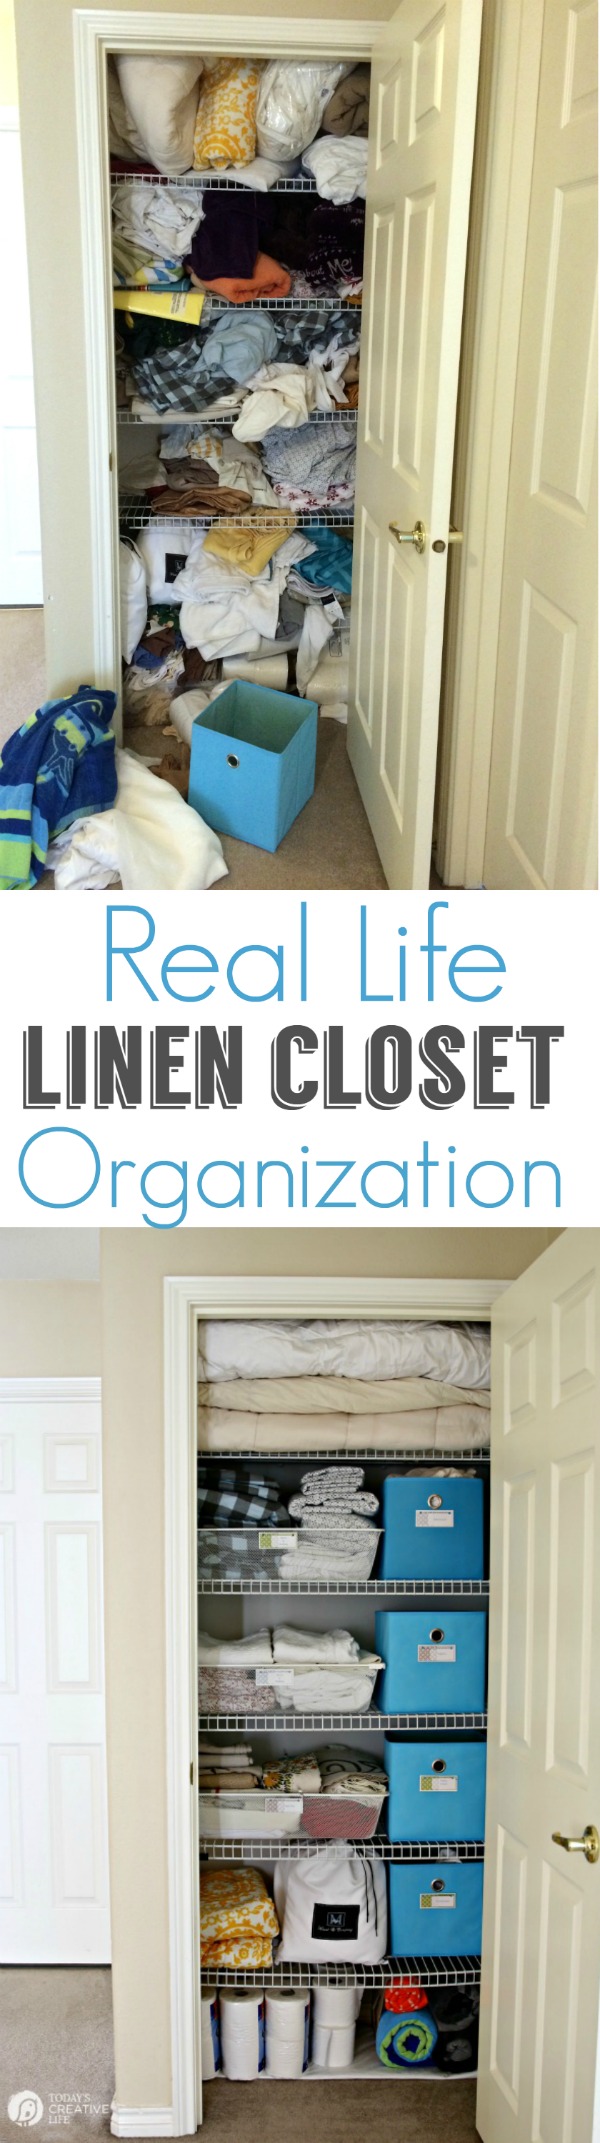 Real Life Linen Closet Organization graphic.